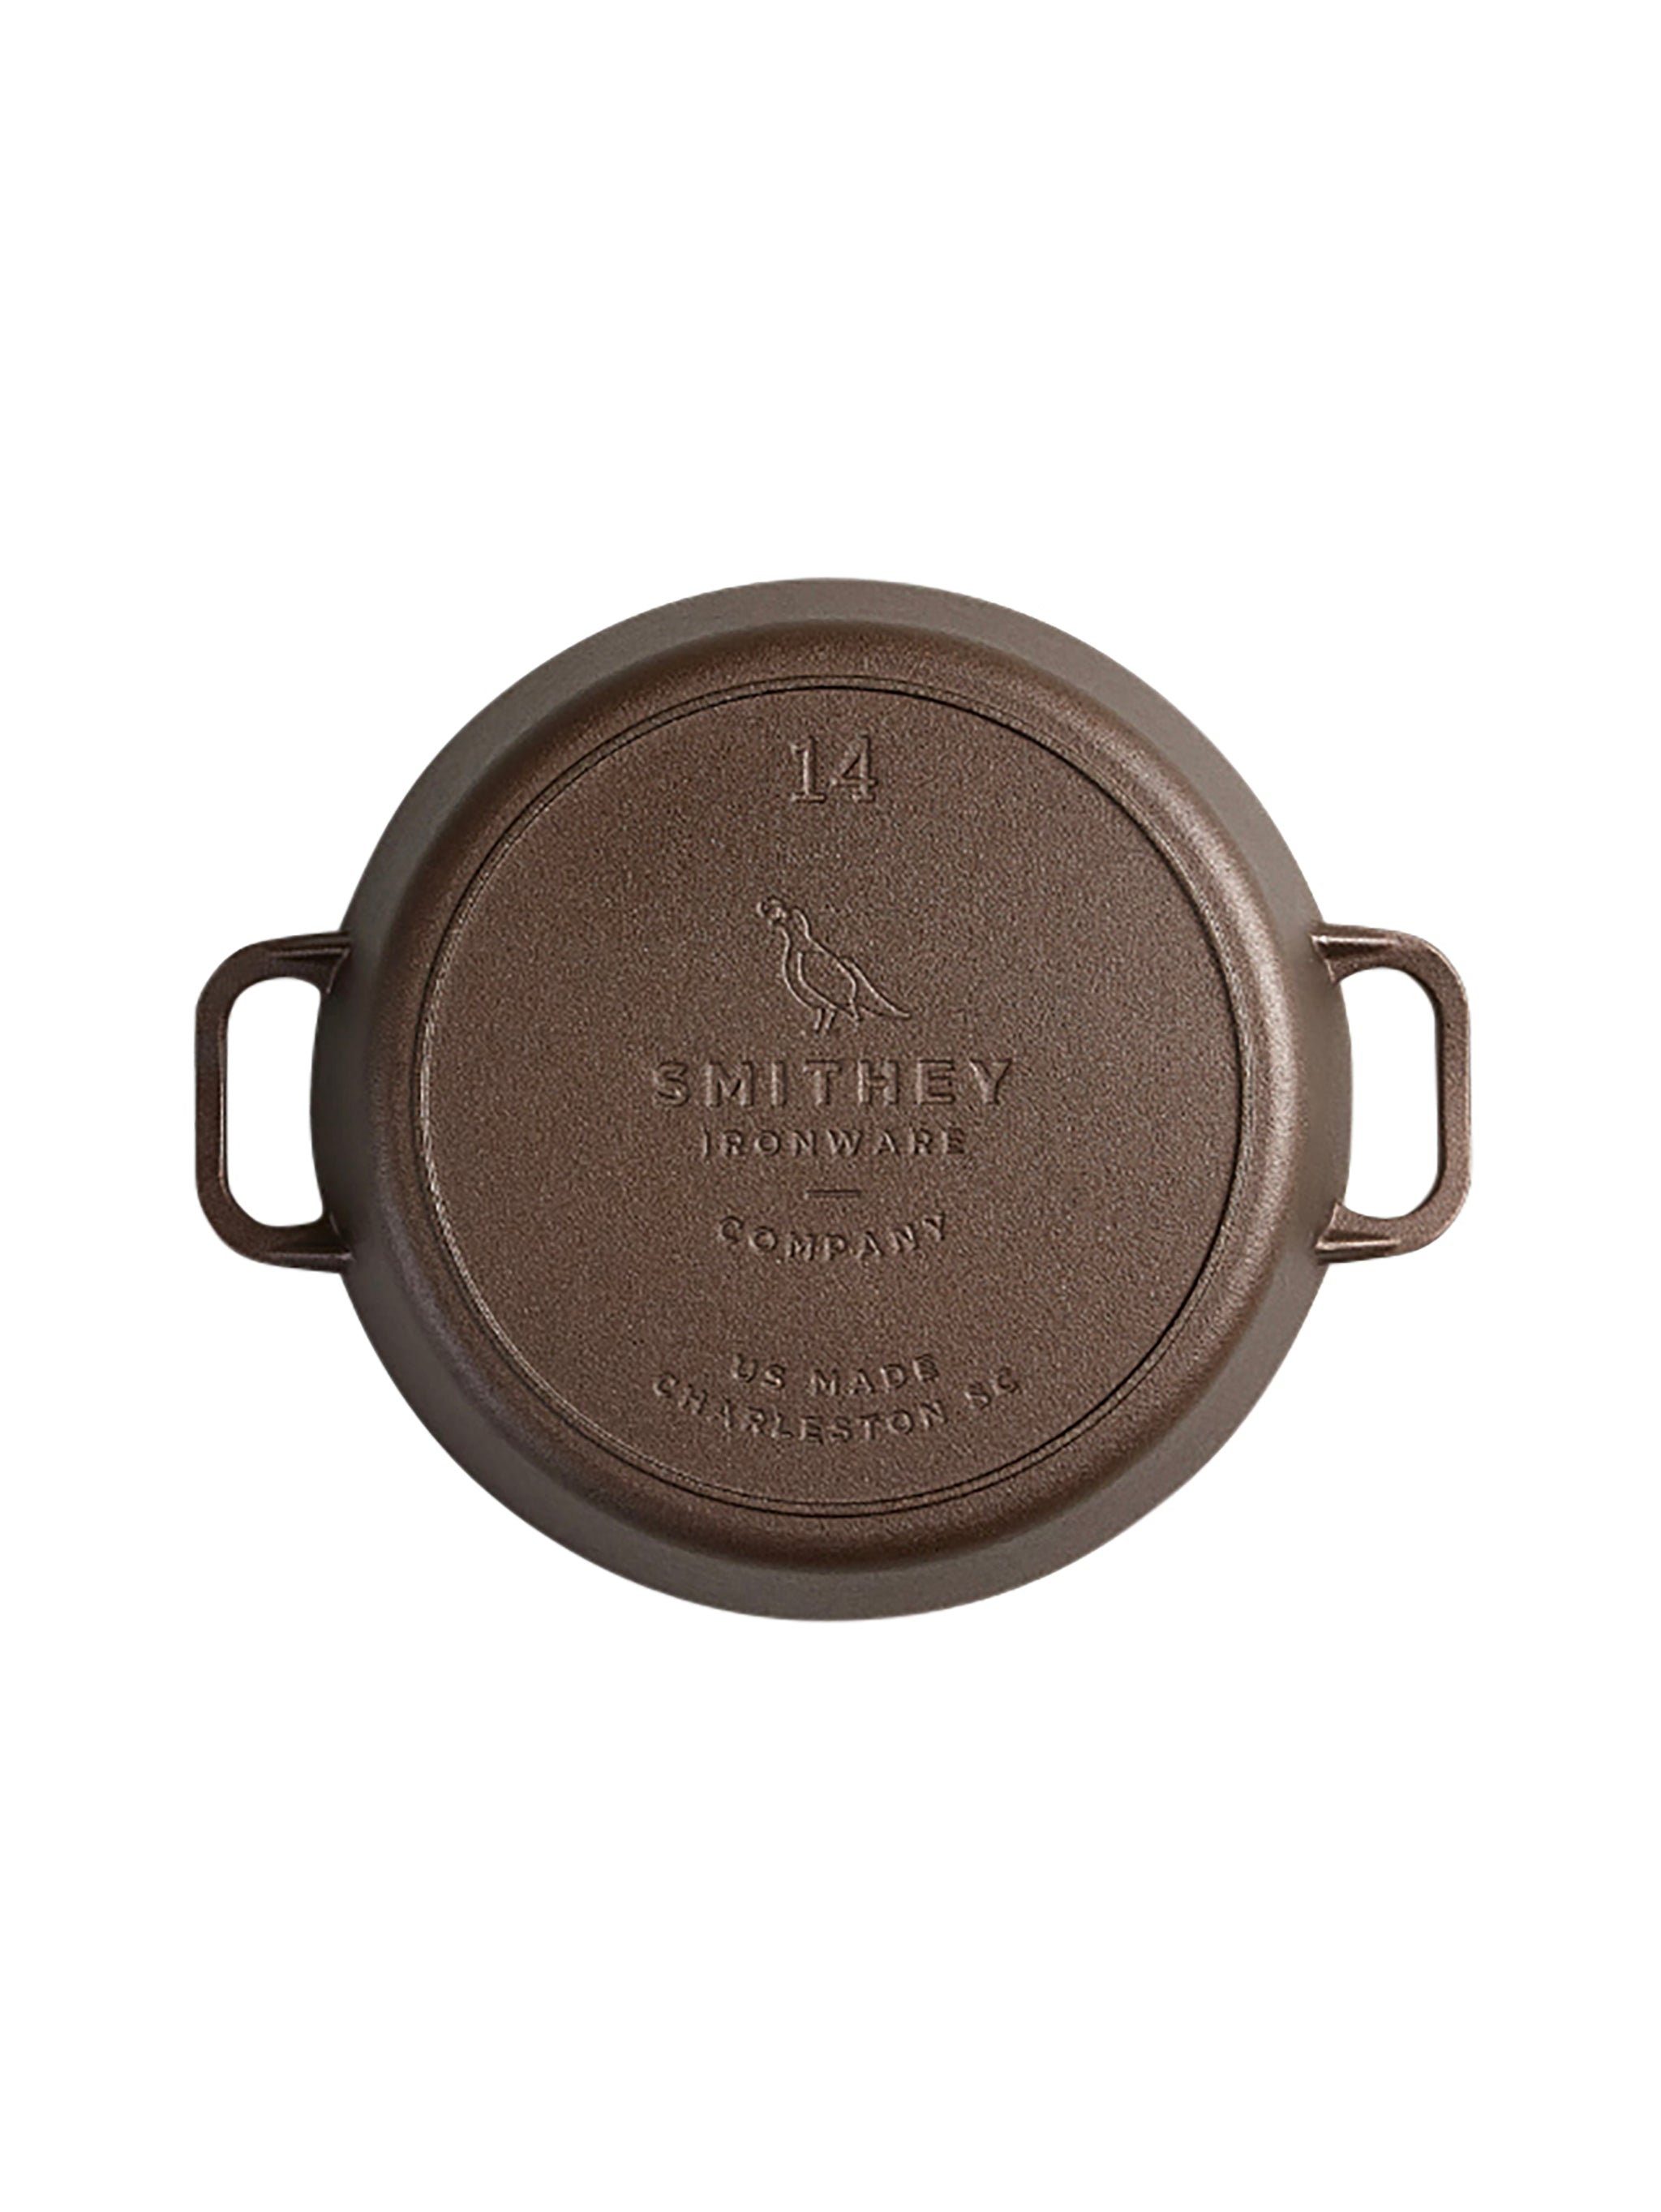 Smithey Ironware Smithey No. 6 Skillet - Duluth Kitchen Co